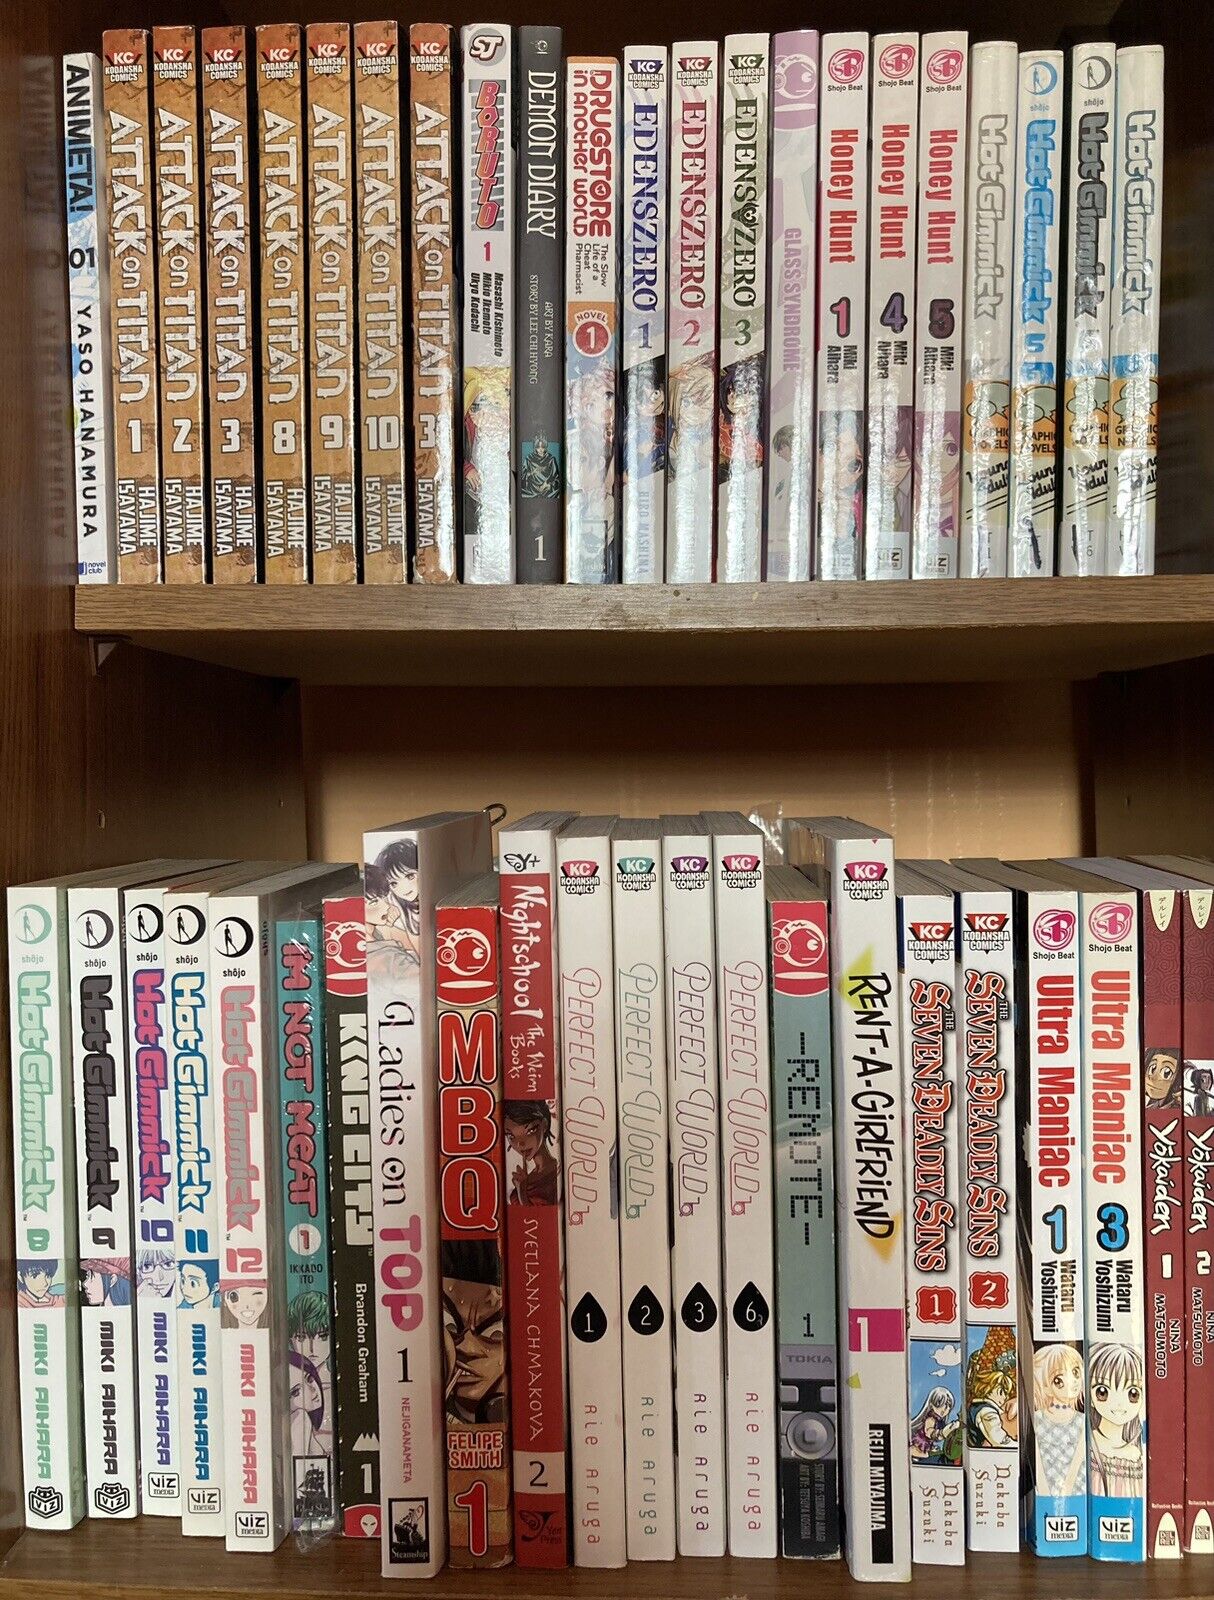 Manga + Light Novel Bundle / Lot - Attack on Titan - Seven Deadly Sins + More